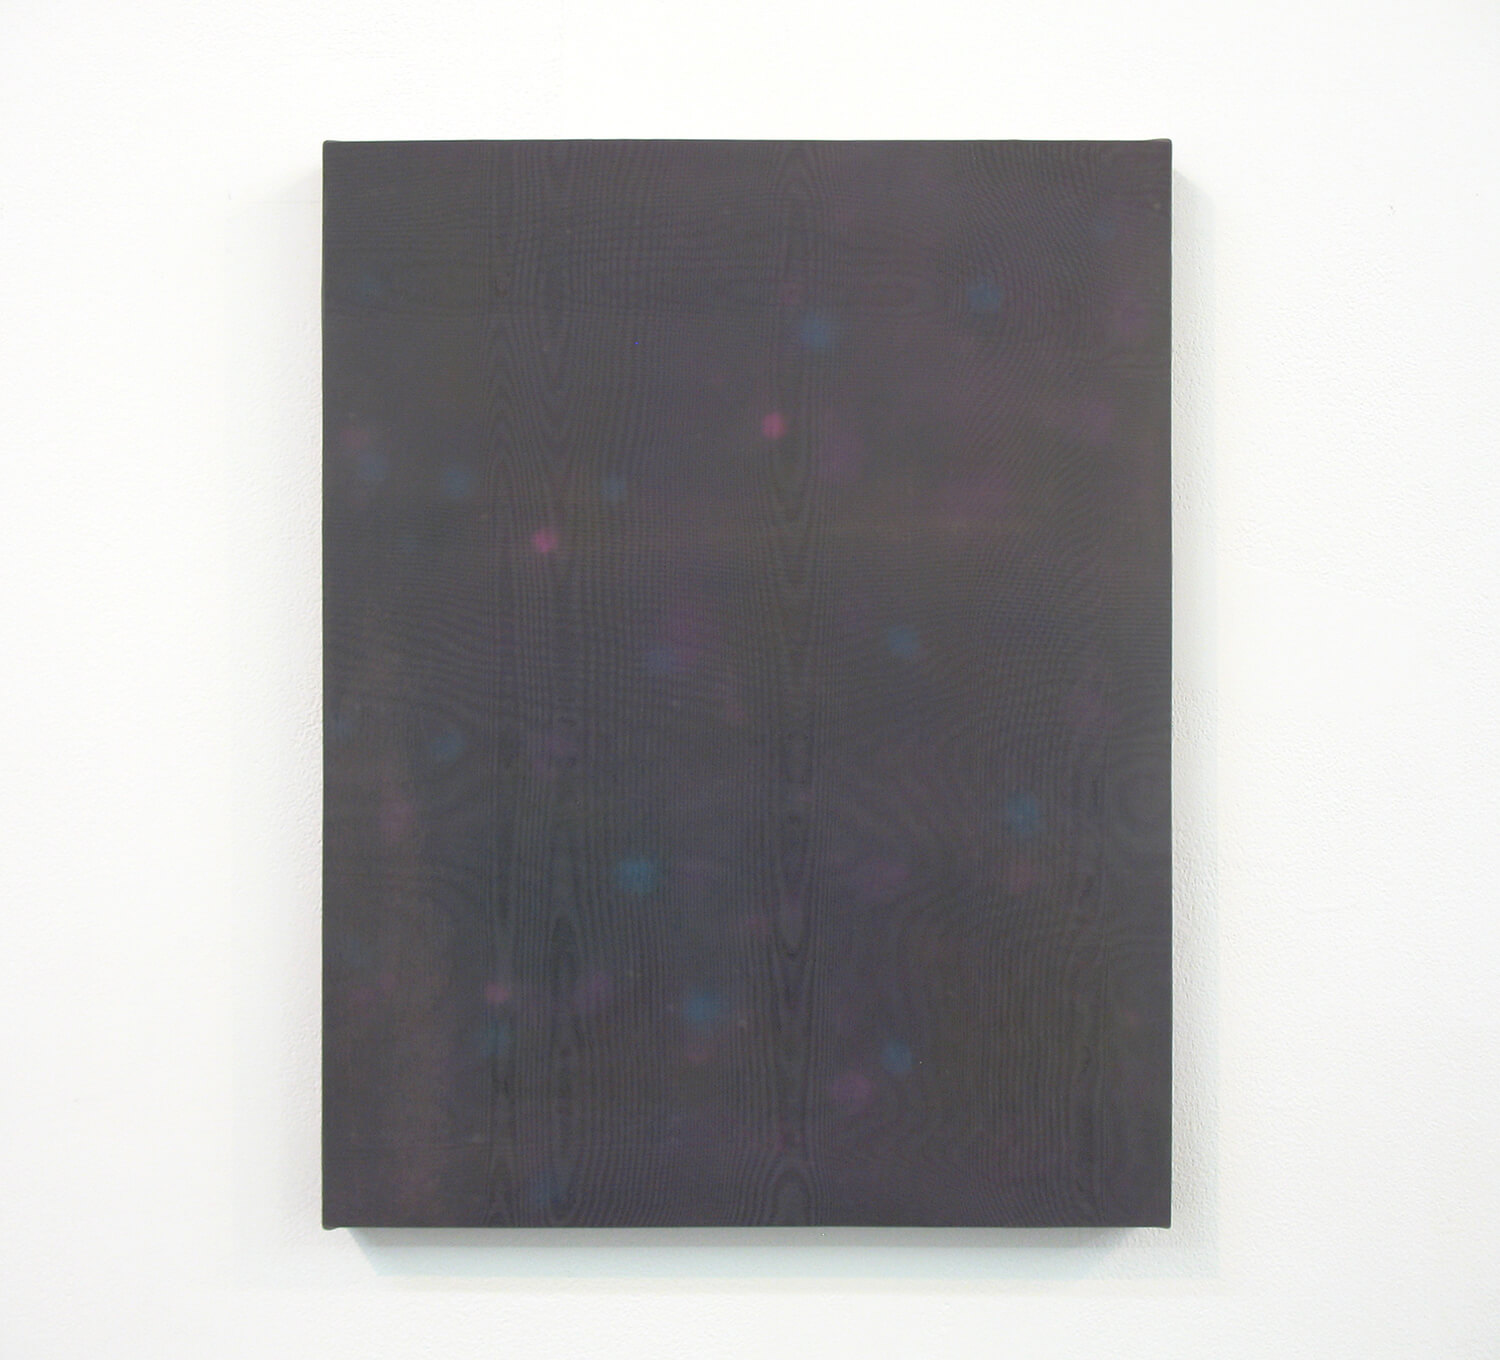 drops #4<br>
Acrylic, glass organdy, cotton, panel 41 x 33 cm 2013